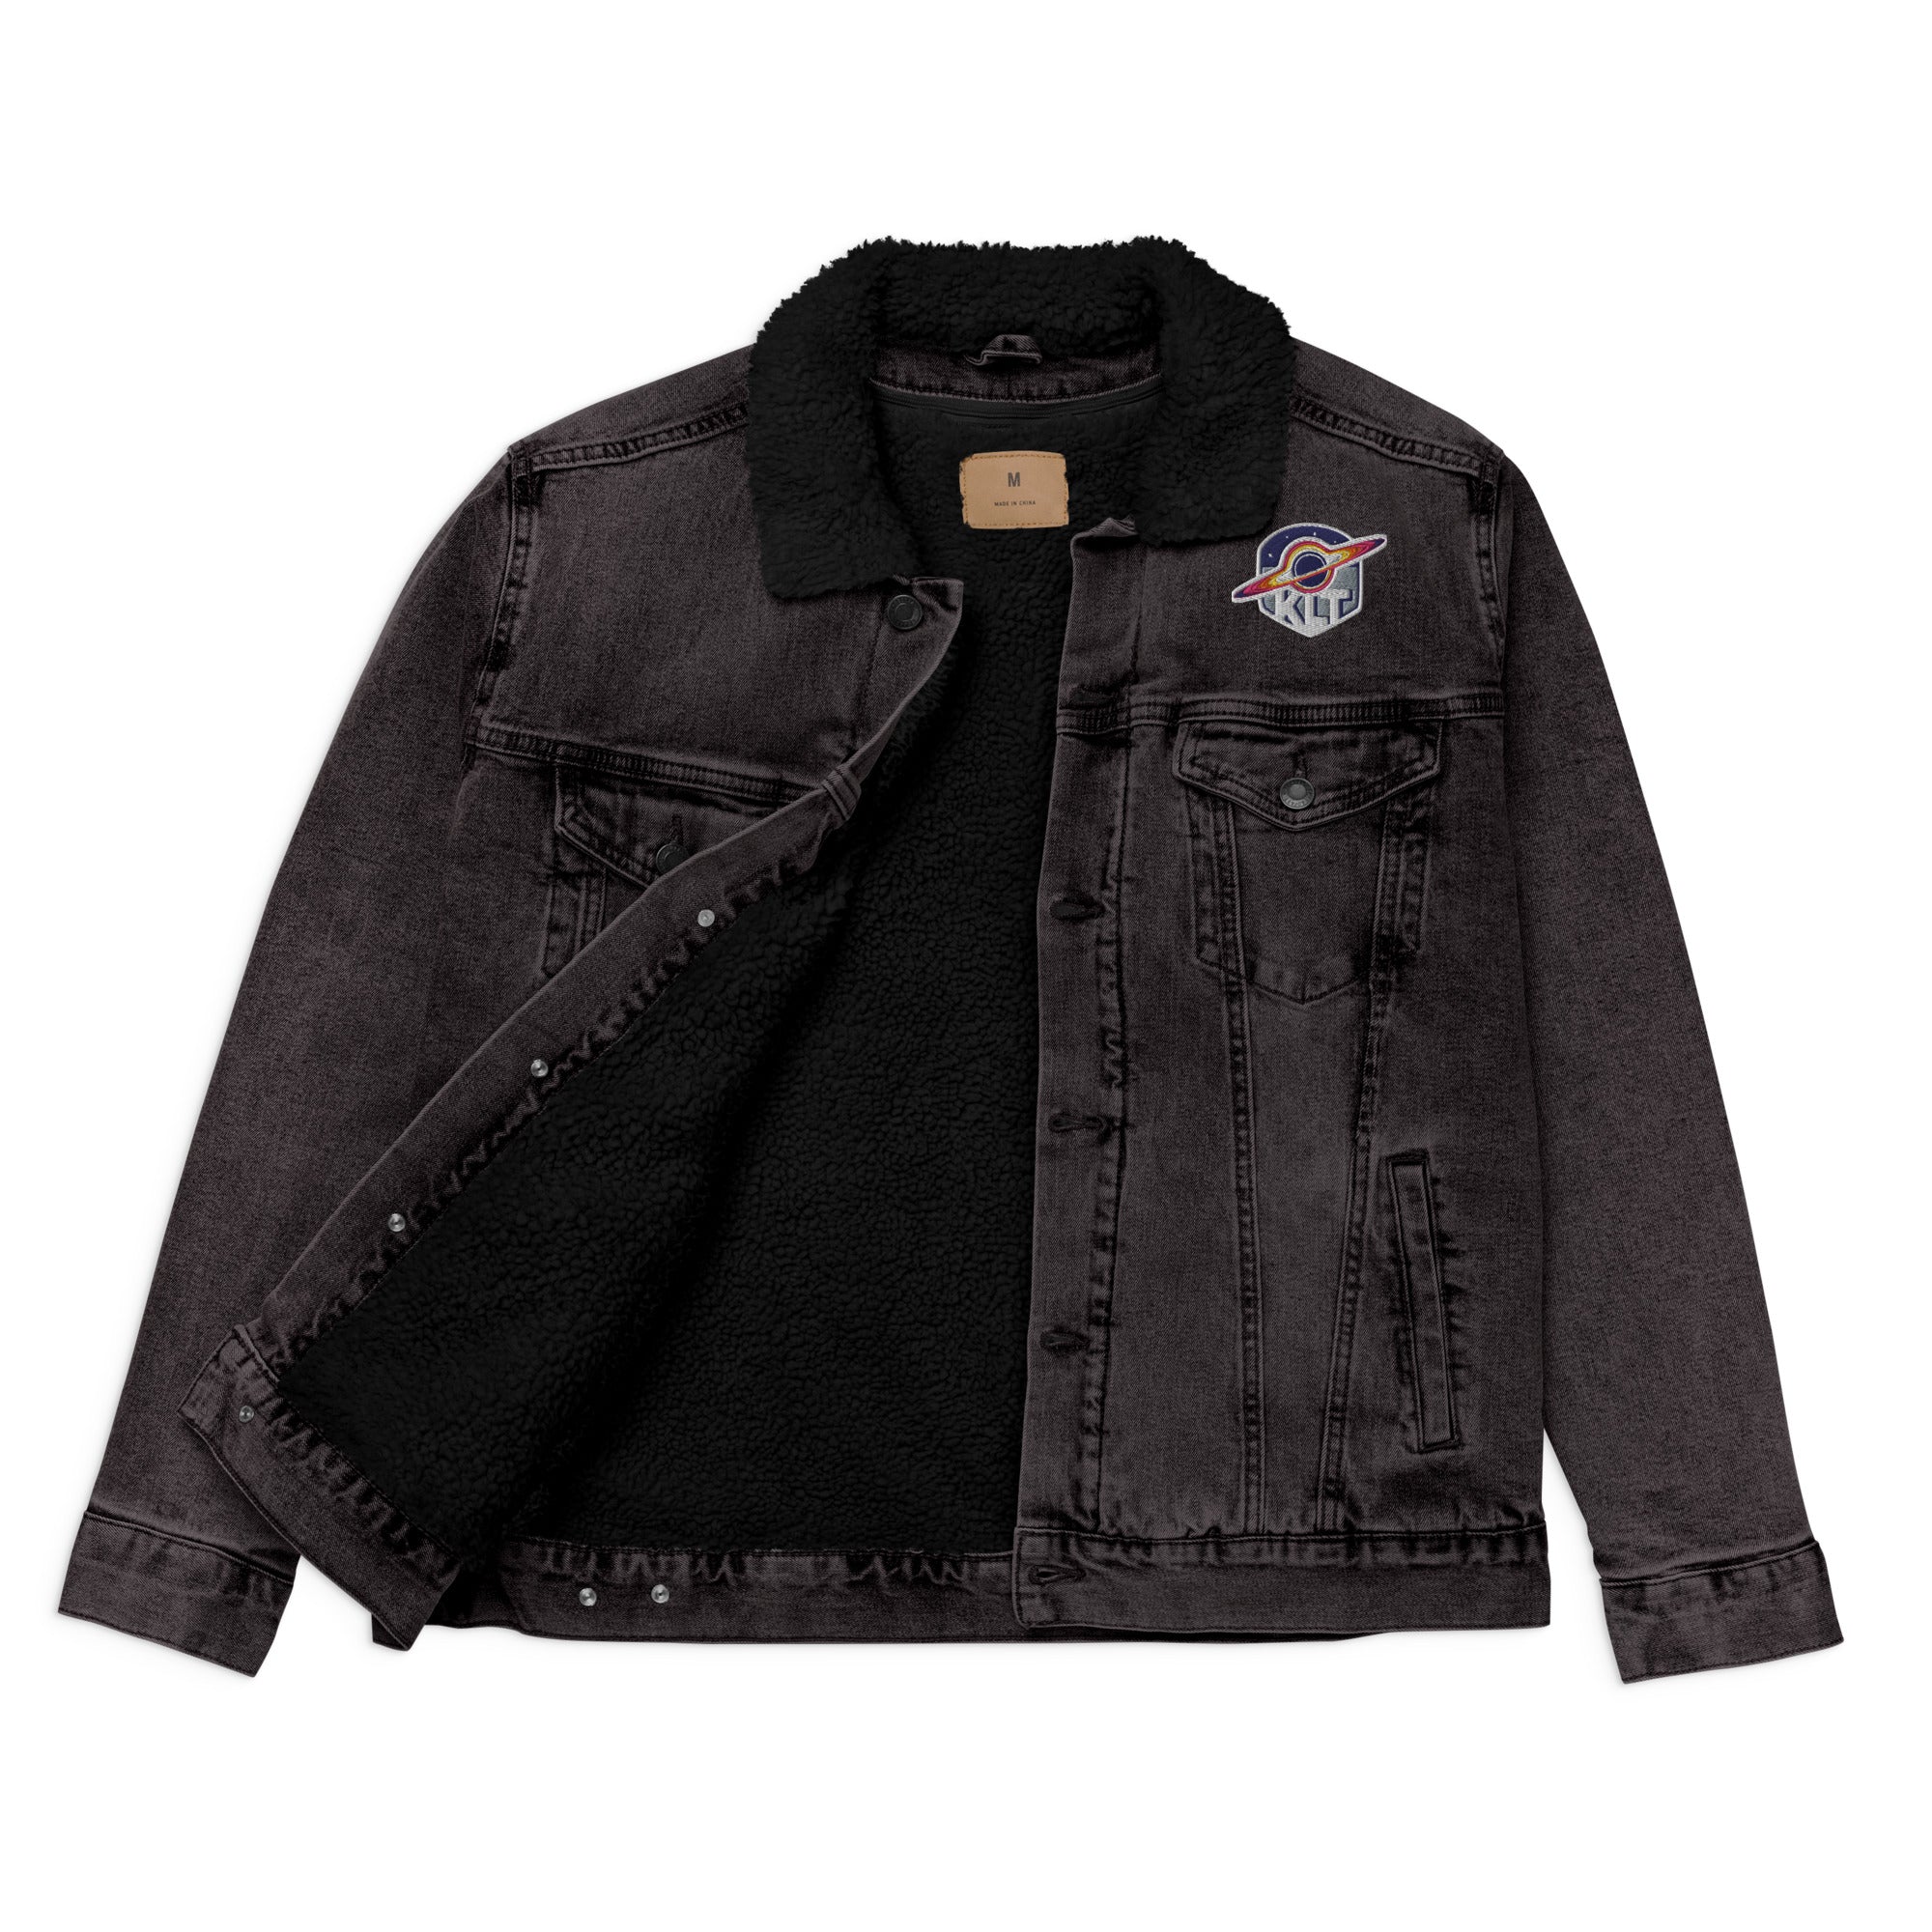 Details more than 190 black jeans jacket boy latest